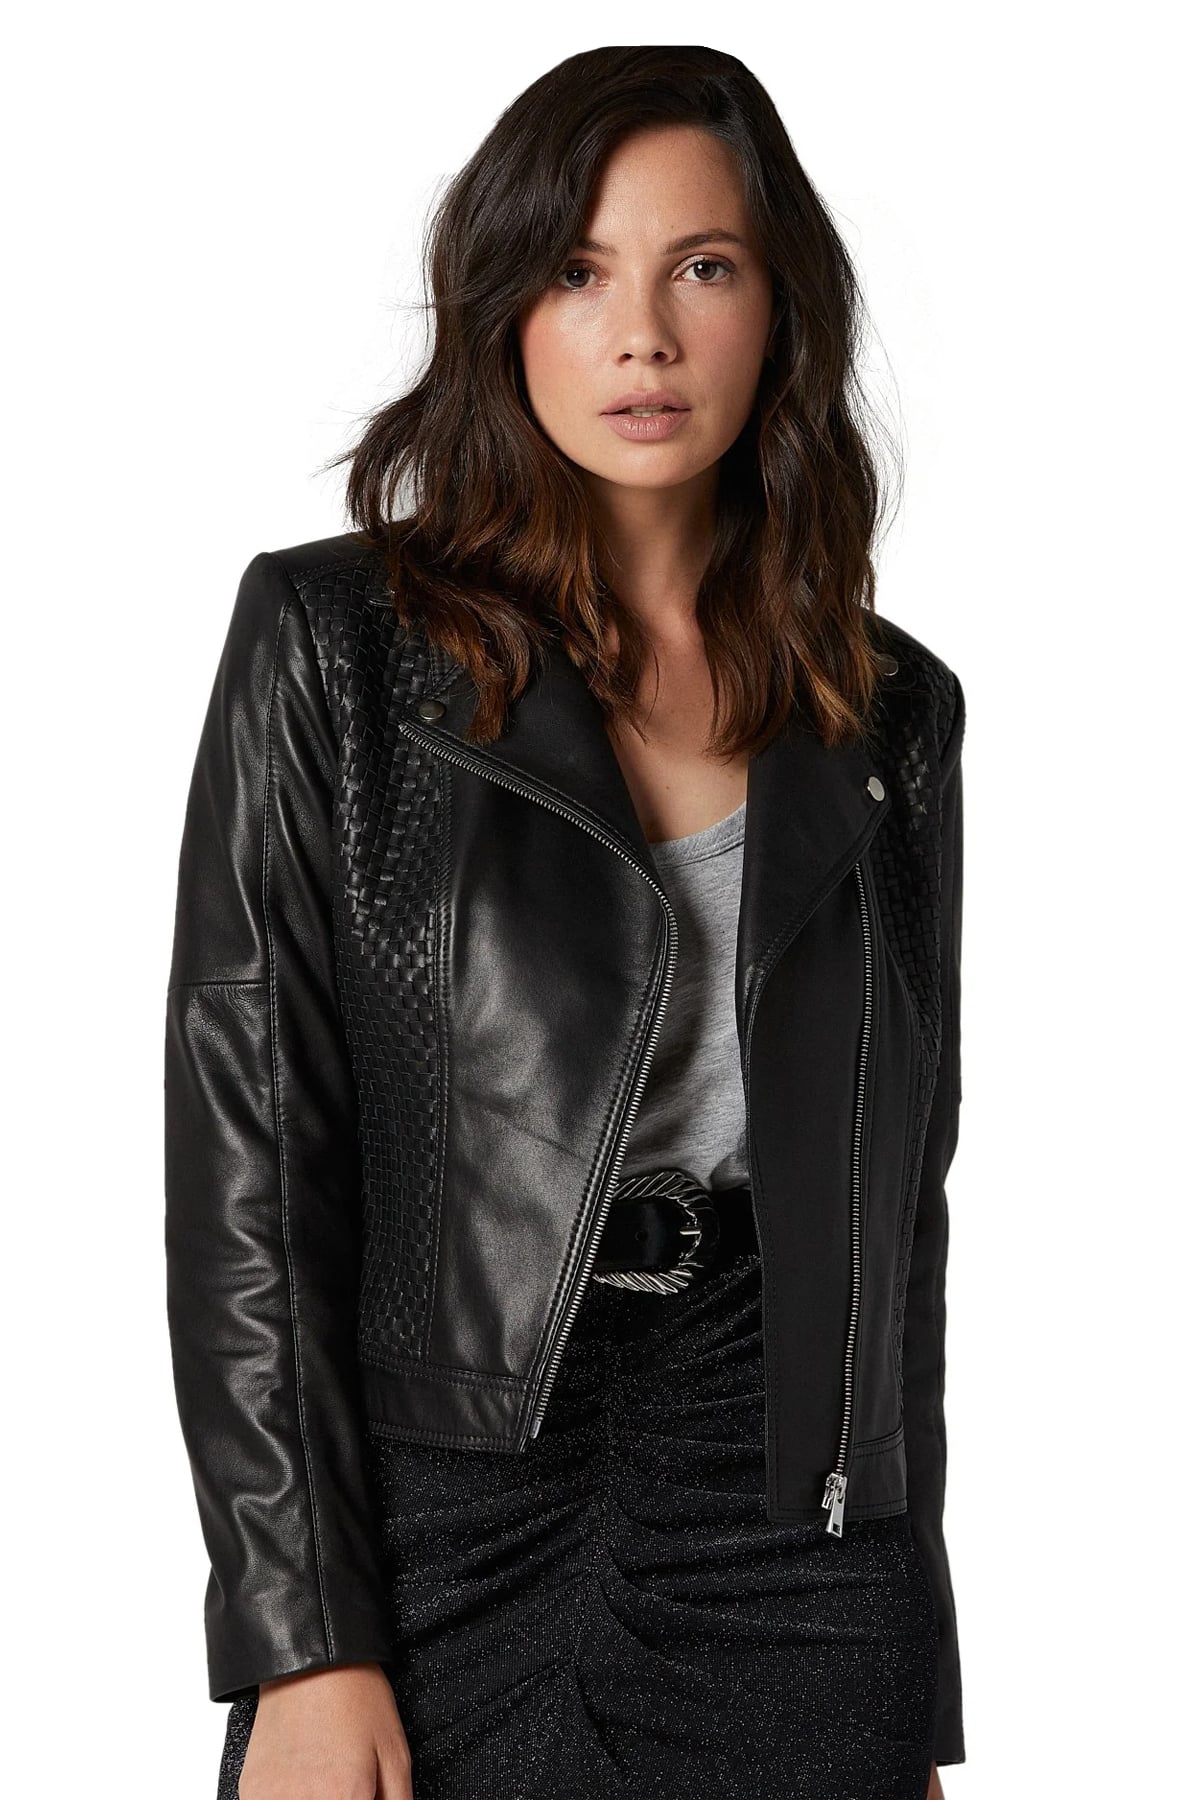 Miranda Kerr Women's 100 % Real Black Leather Jacket